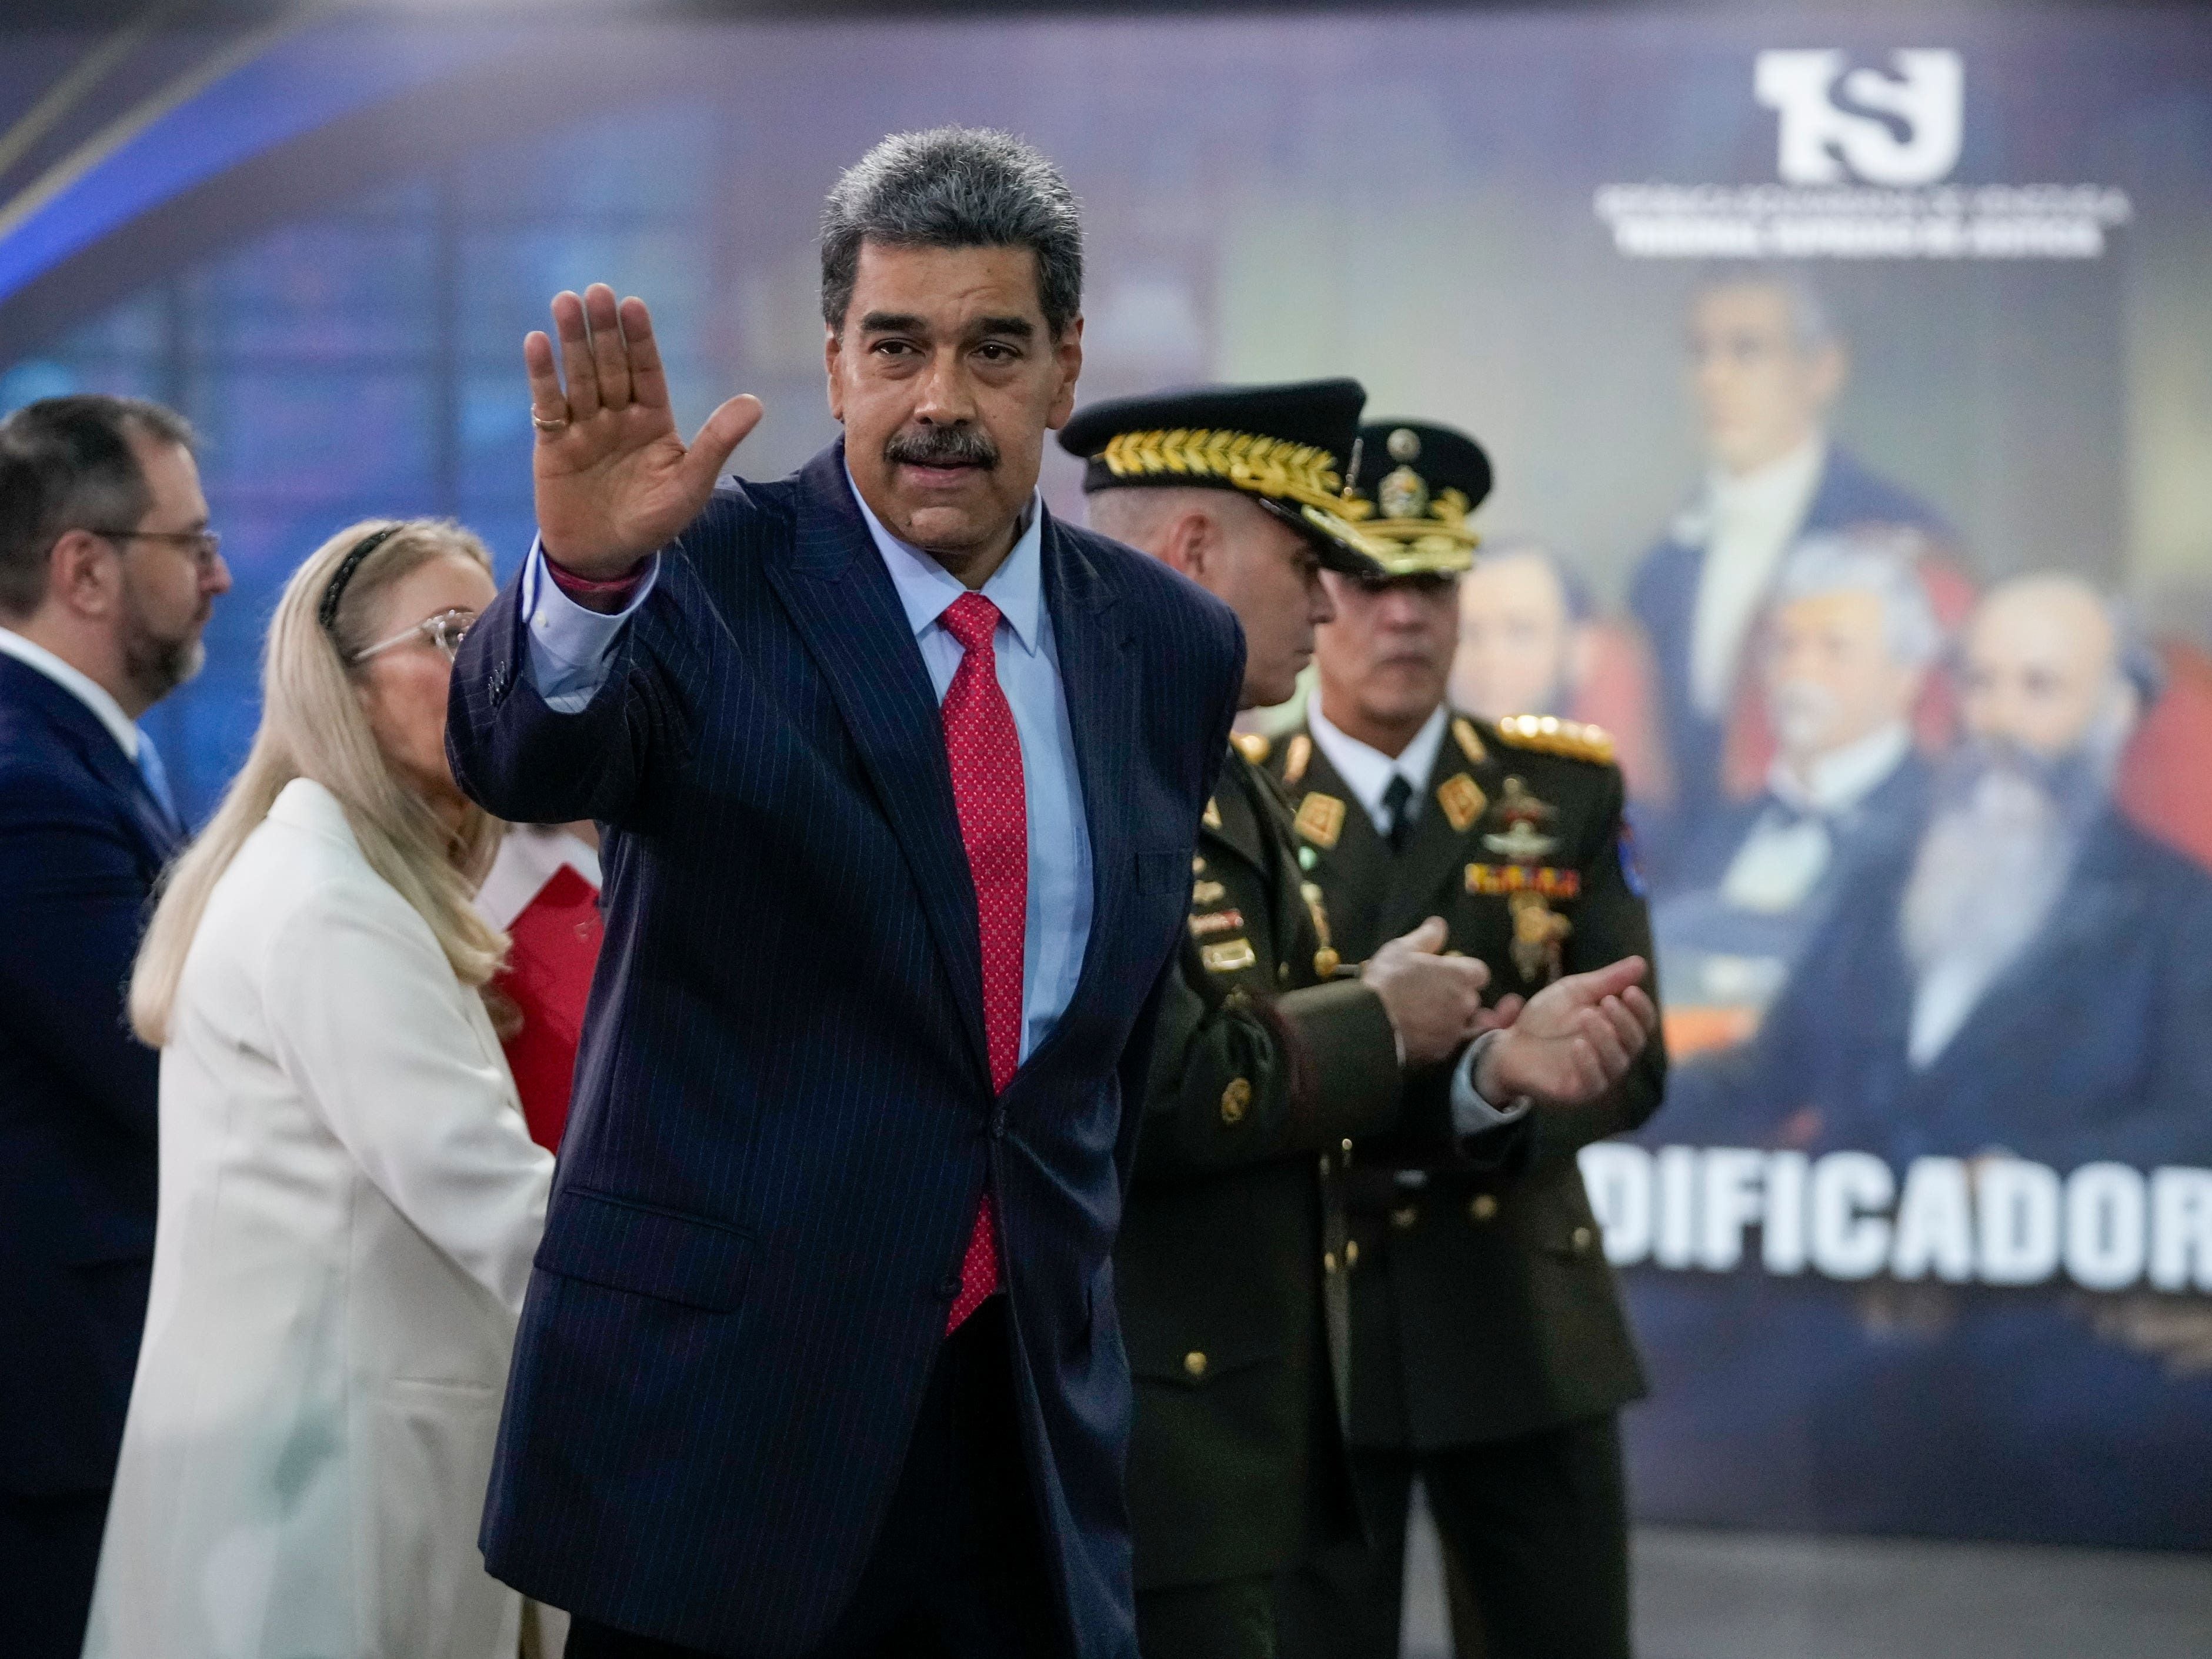 Nicolas Maduro asks Supreme Court to audit Venezuela’s presidential election